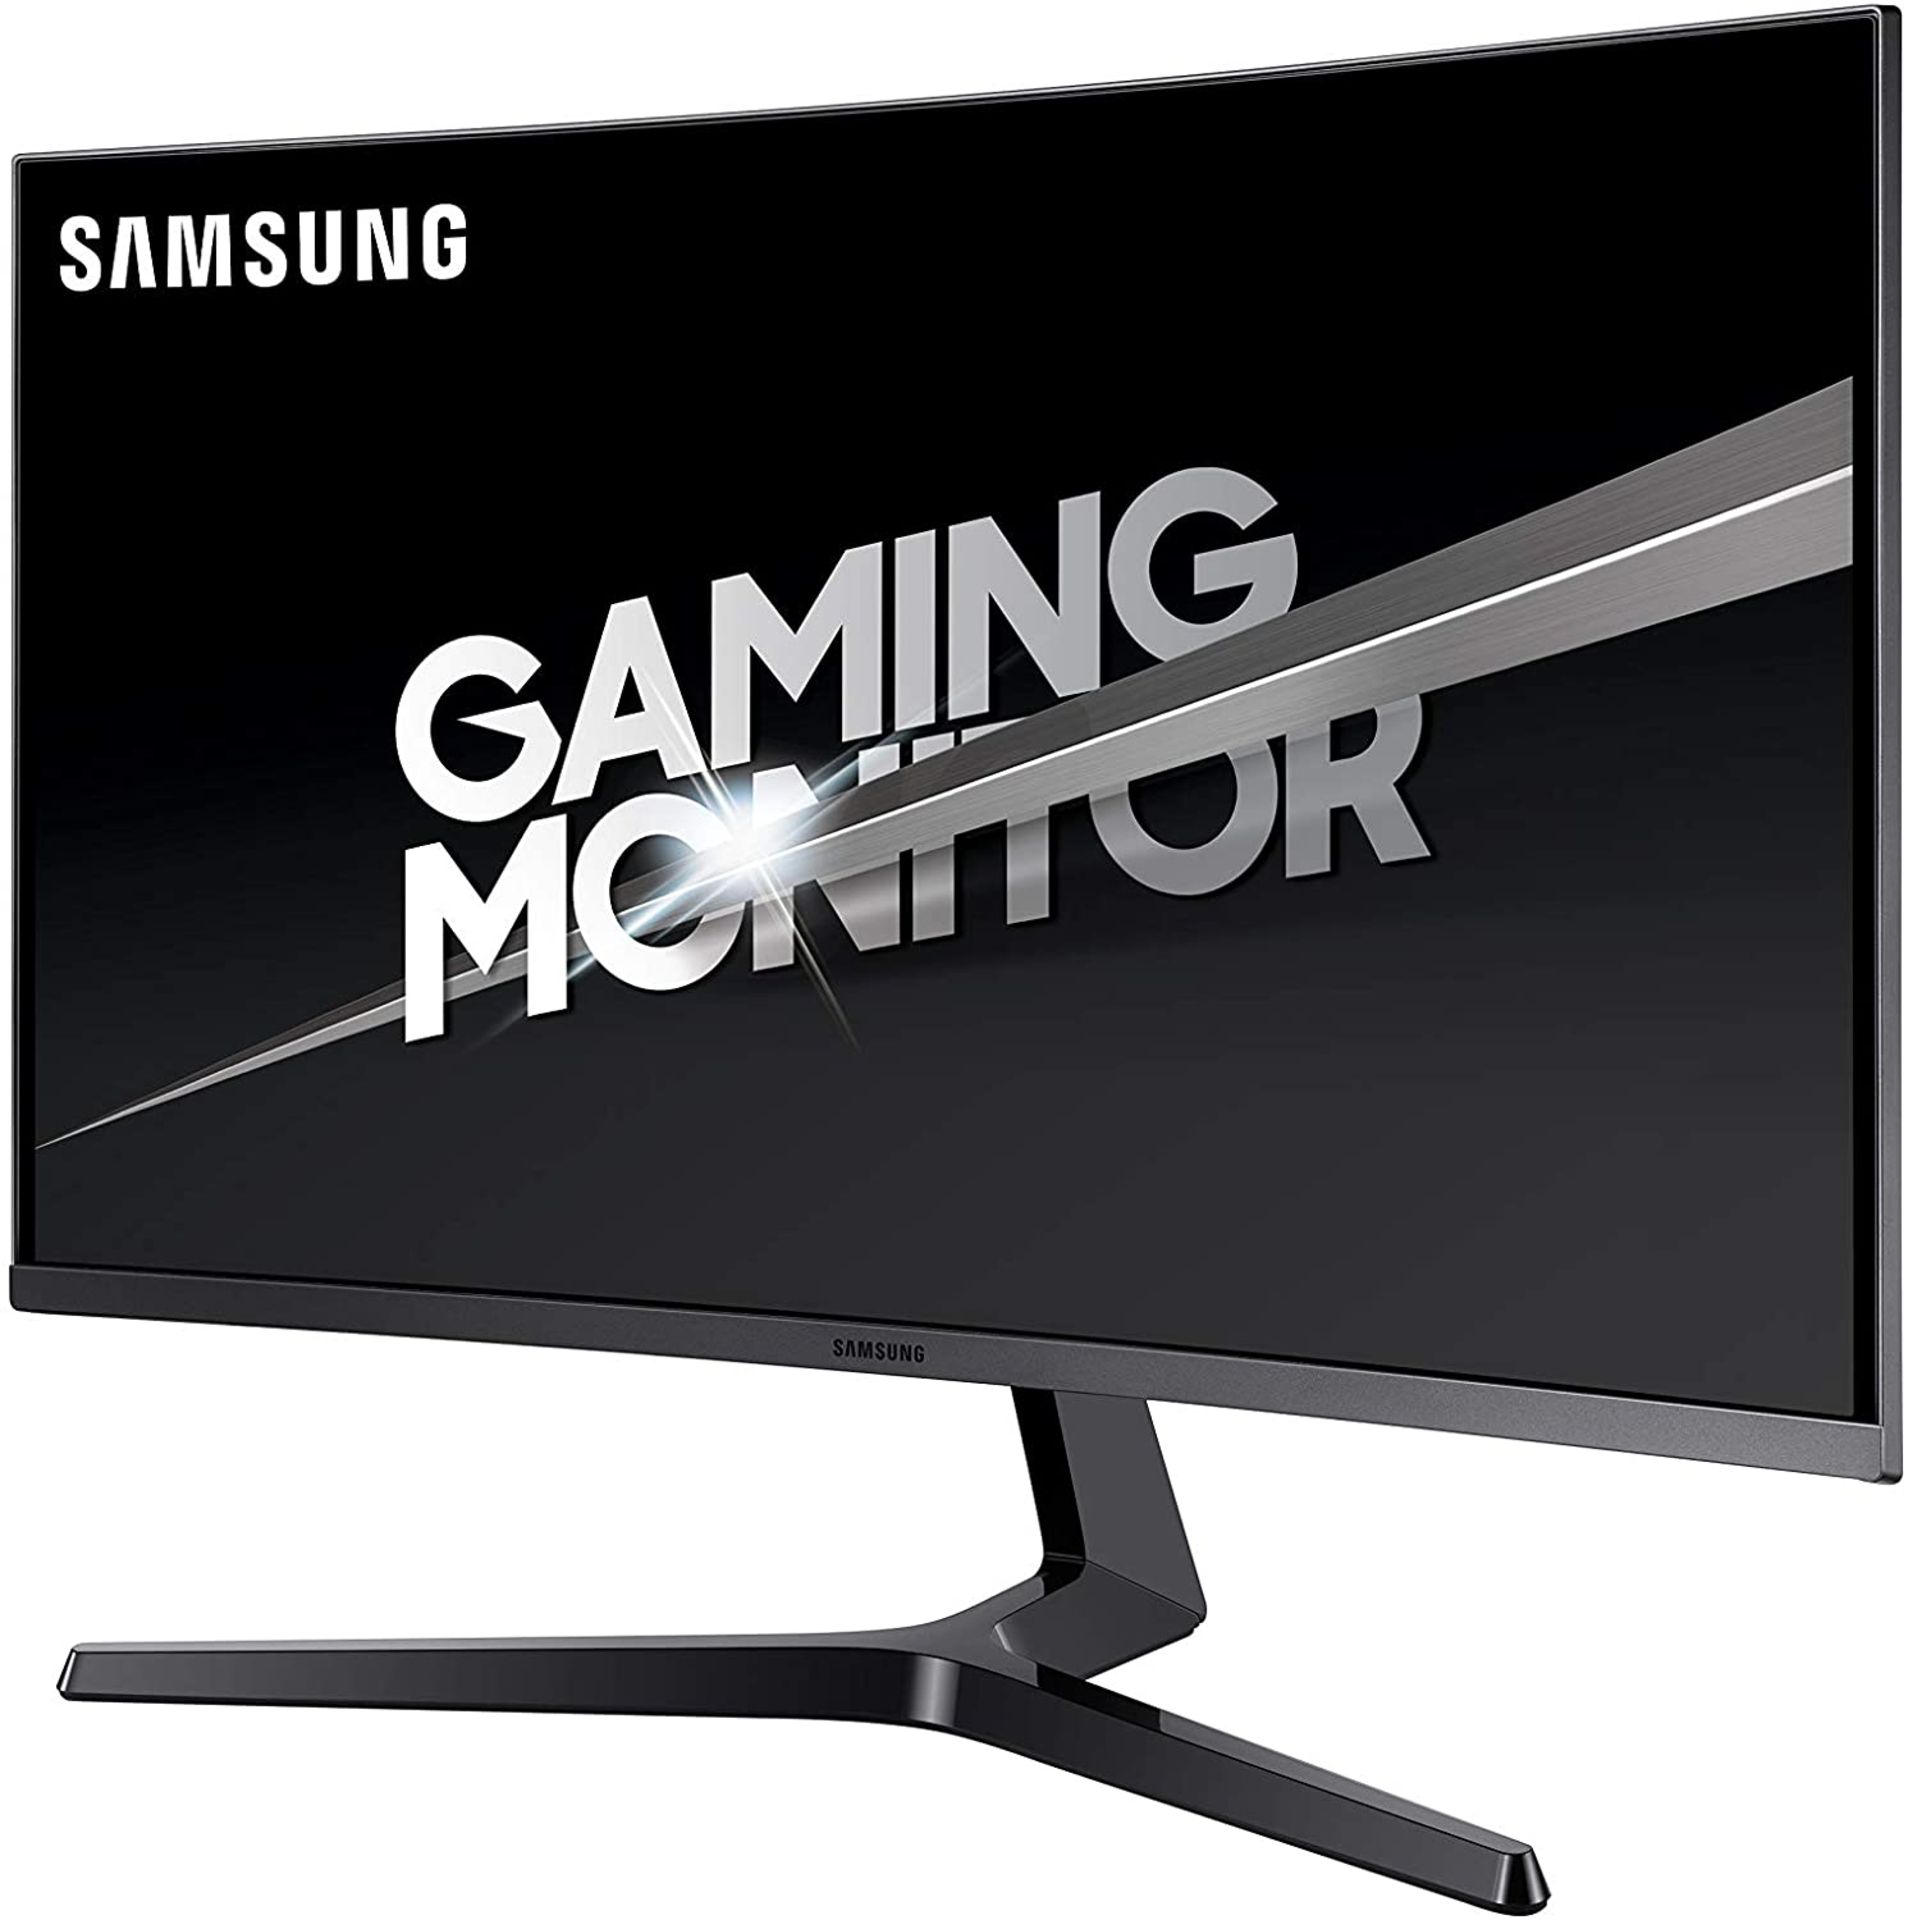 Samsung 27" Curved Gaming Monitor - WQHD 2560x1440, 144Hz, 2x HDMI, DisplayPort - Image 3 of 6